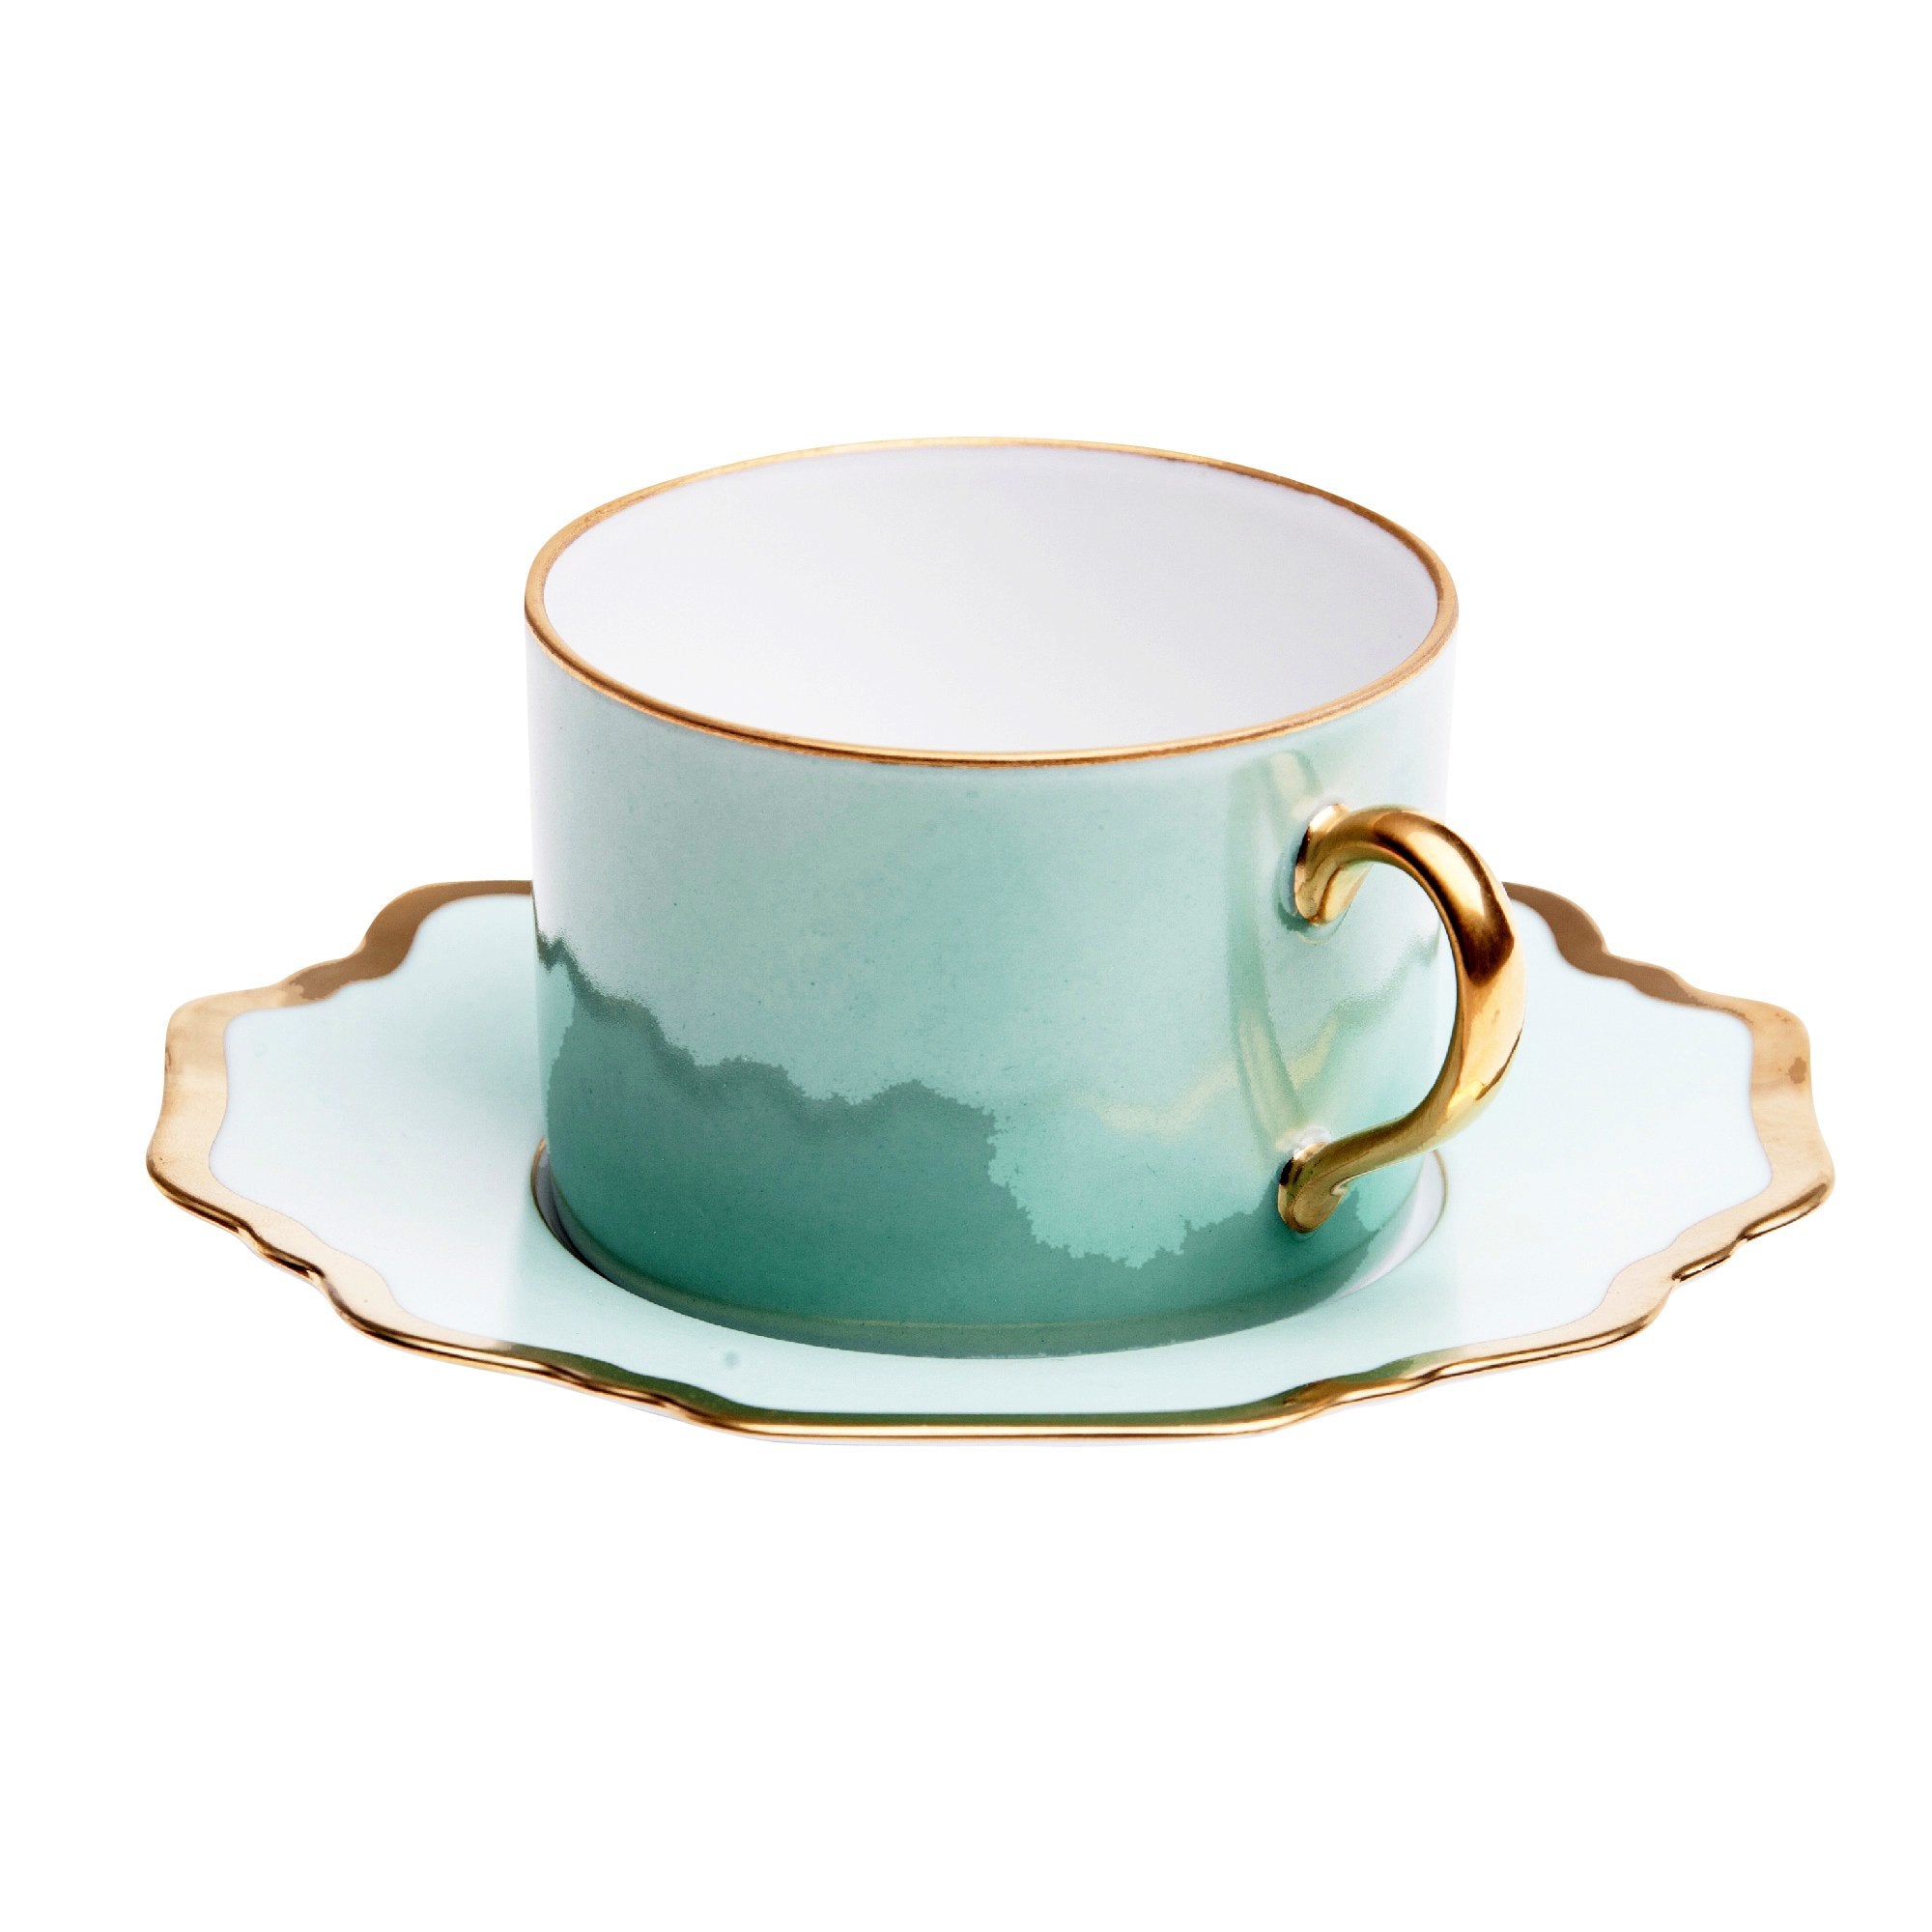 Anna's Palette Aqua Green Tea Cup and Saucer